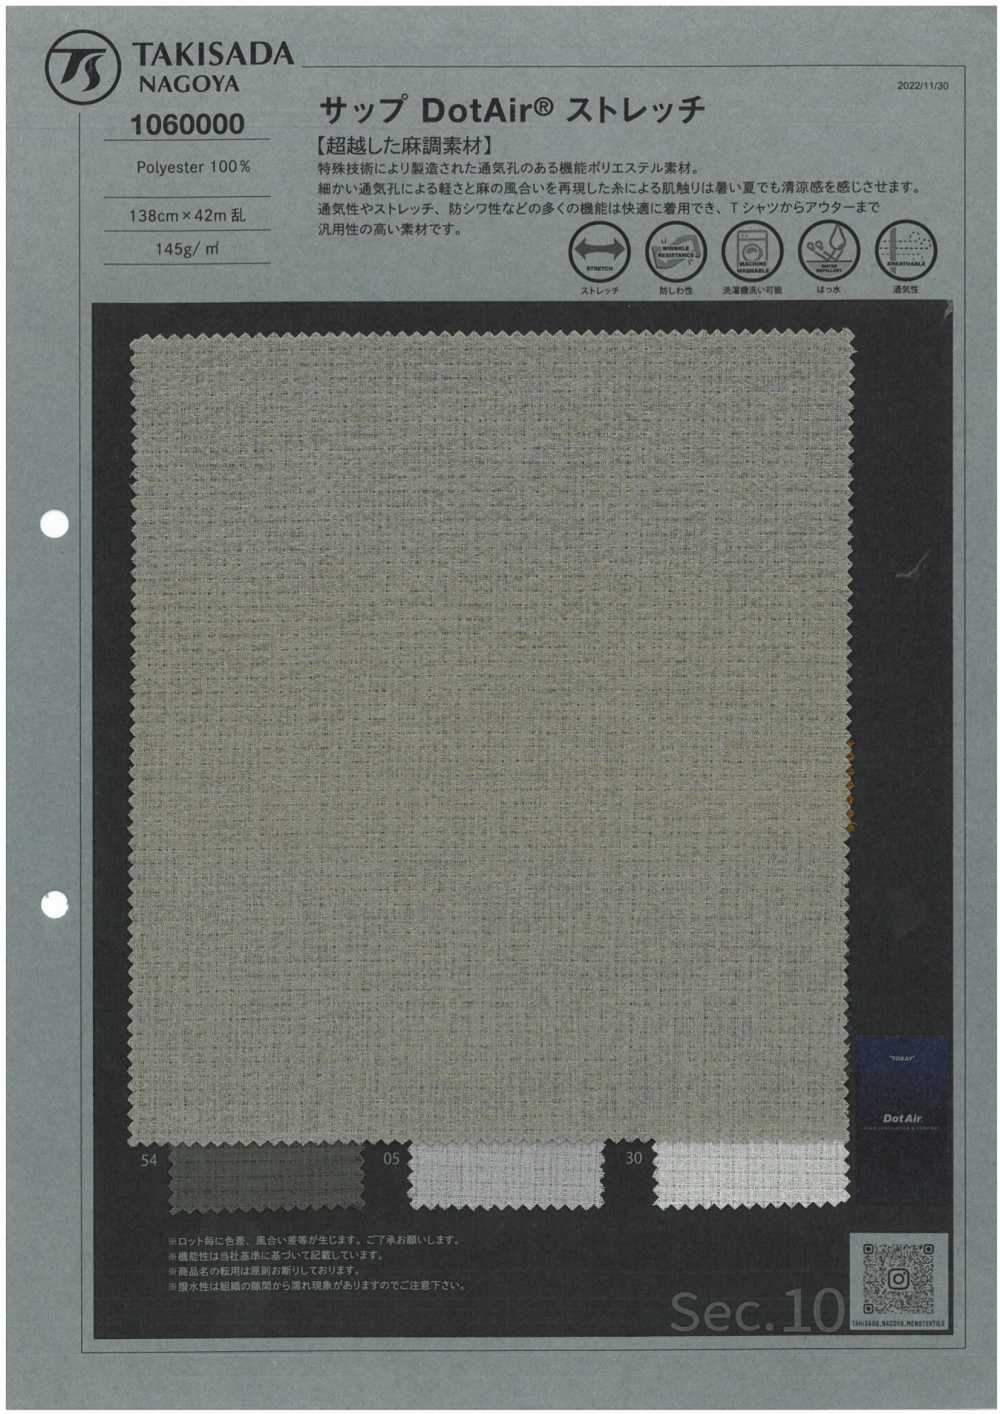 1060000 Lin Dot Air Stretch[Fabrication De Textile] Takisada Nagoya